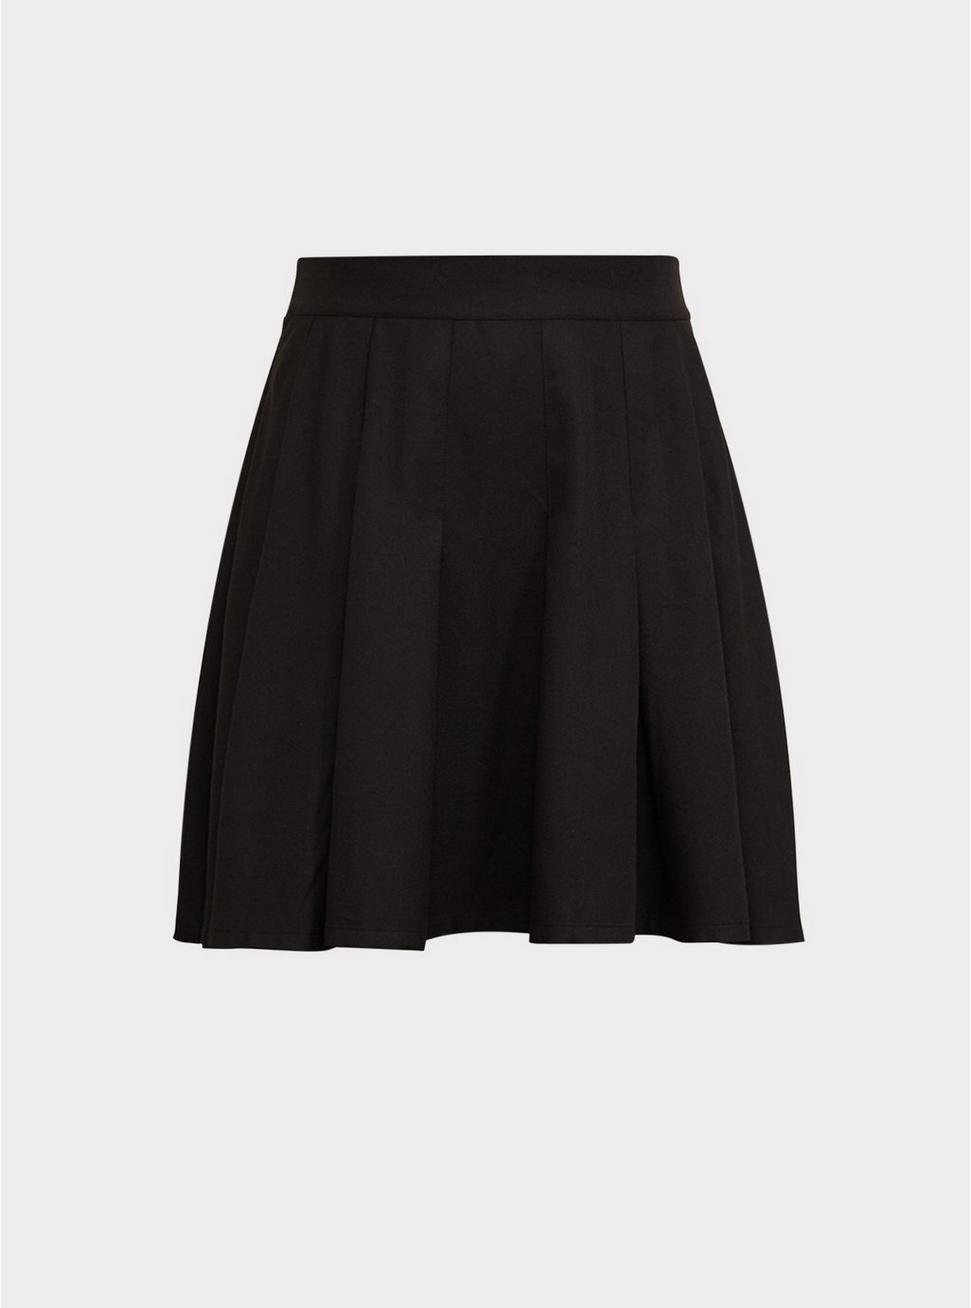 Mini Twill Pleated Skater Skirt, BLACK, hi-res